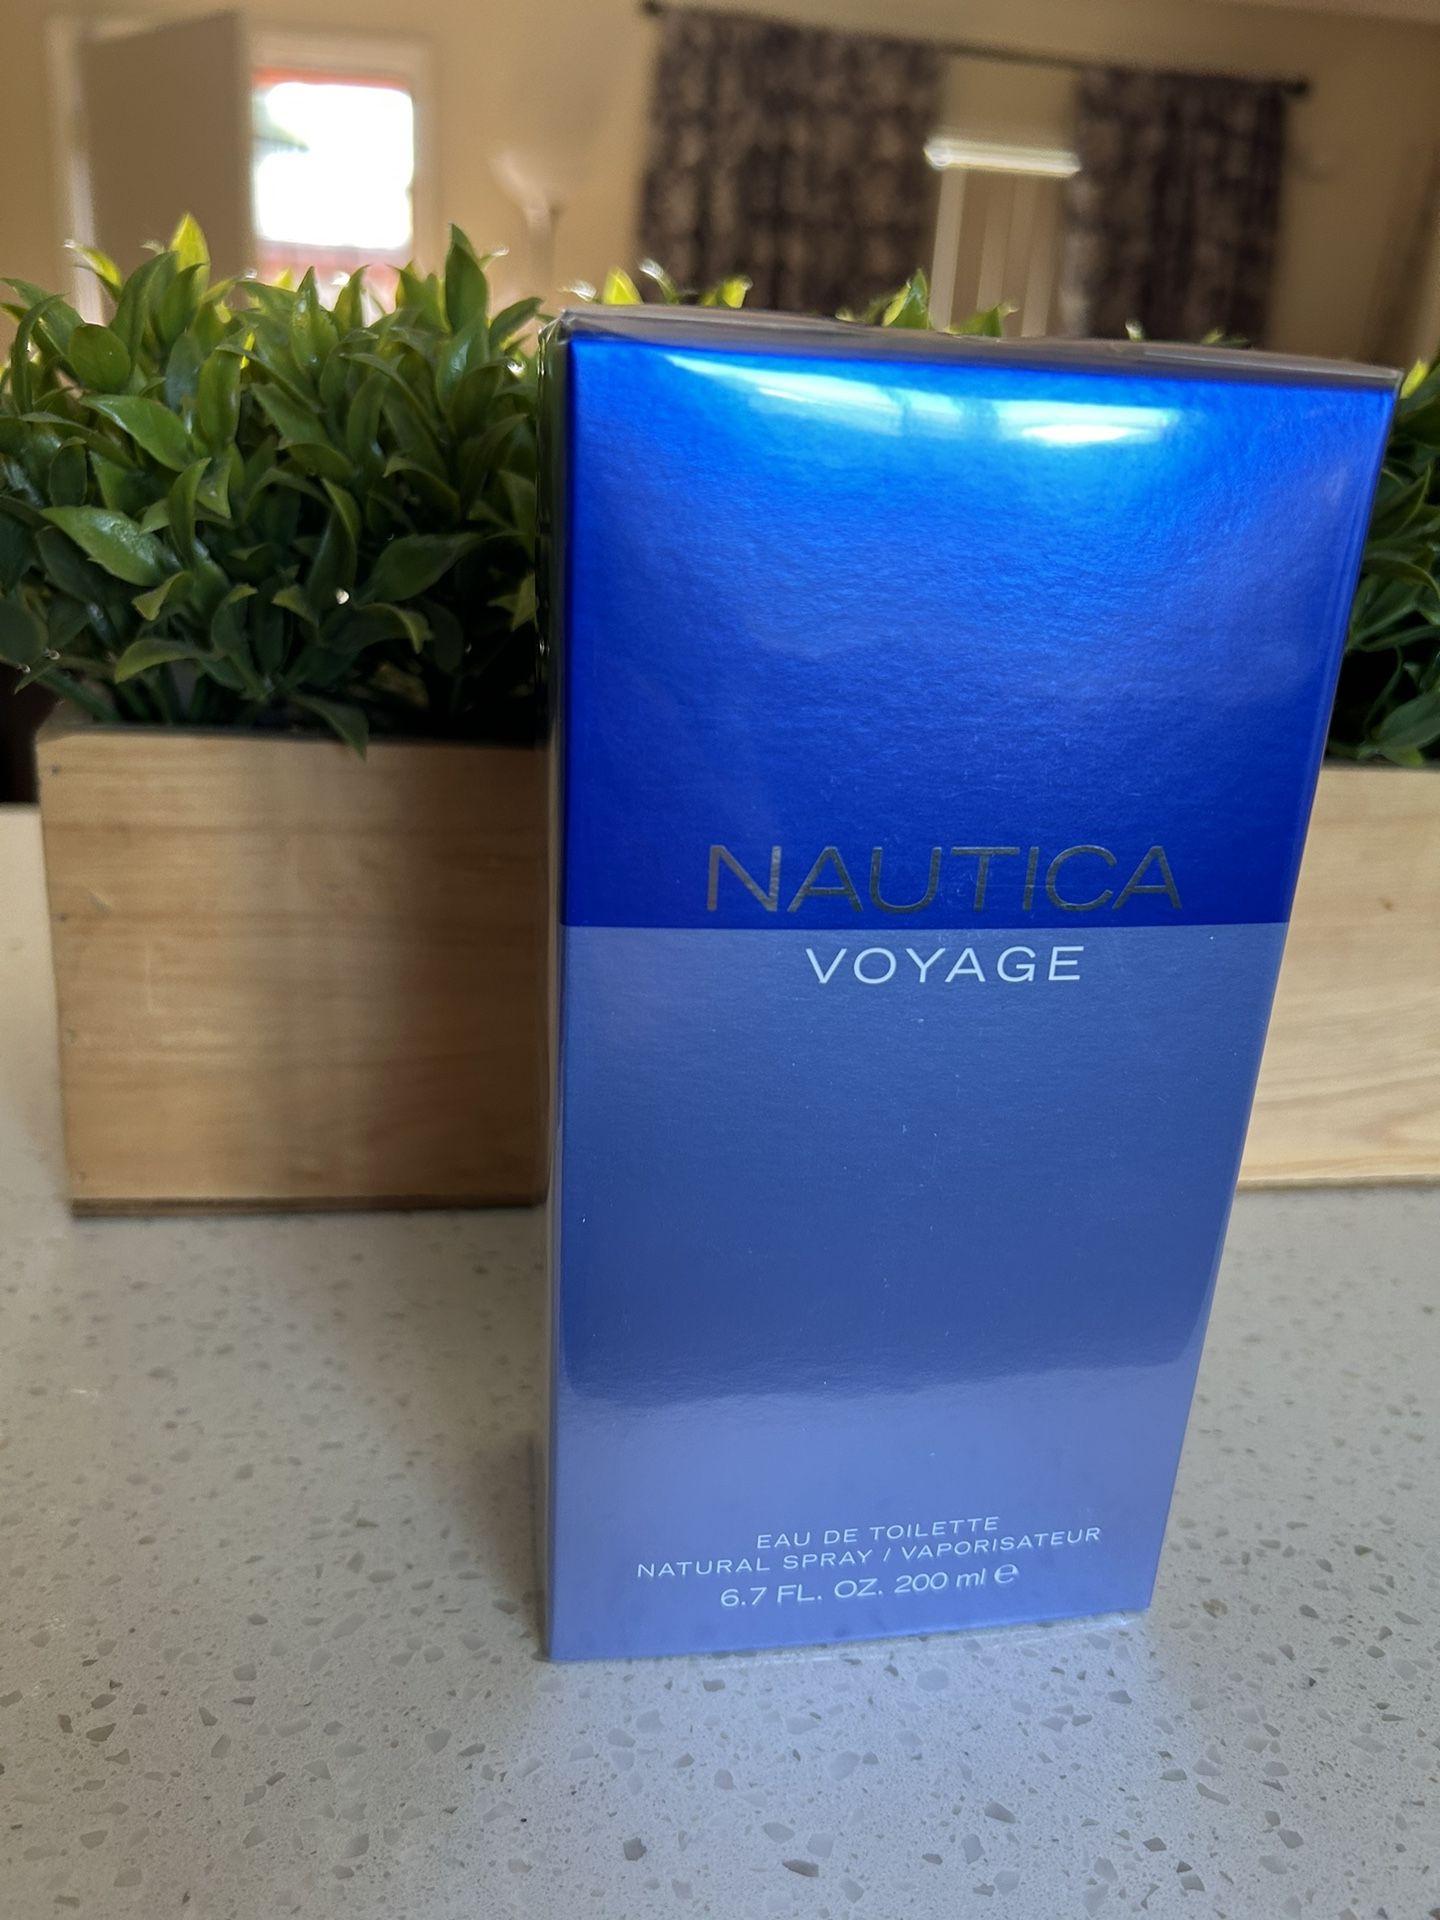 Nautica Voyage Nautica cologne - a fragrance for men 2006